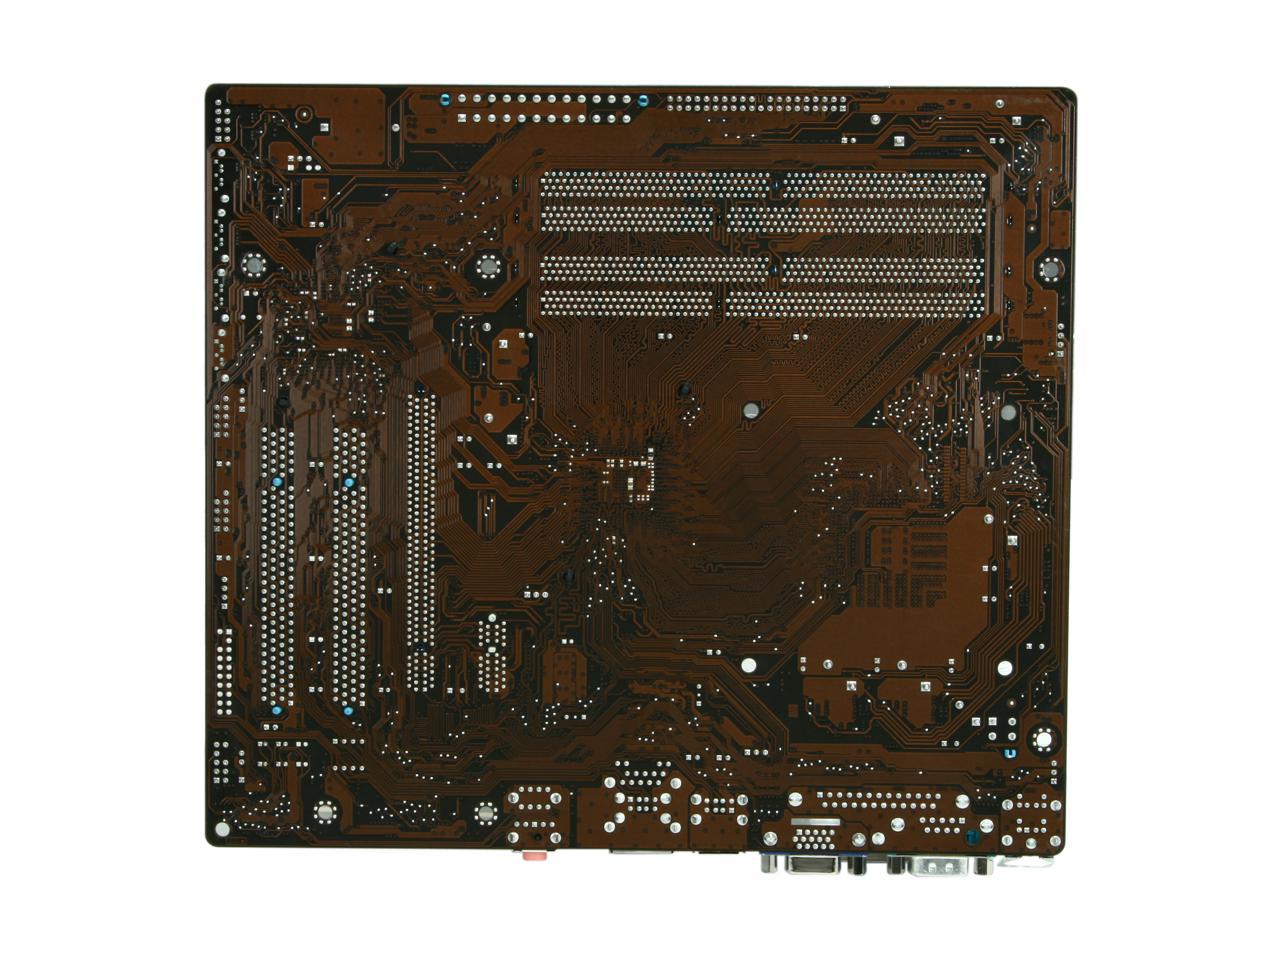 ASUS P5G41C-M LX LGA 775 Intel G41 Micro ATX Intel Motherboard